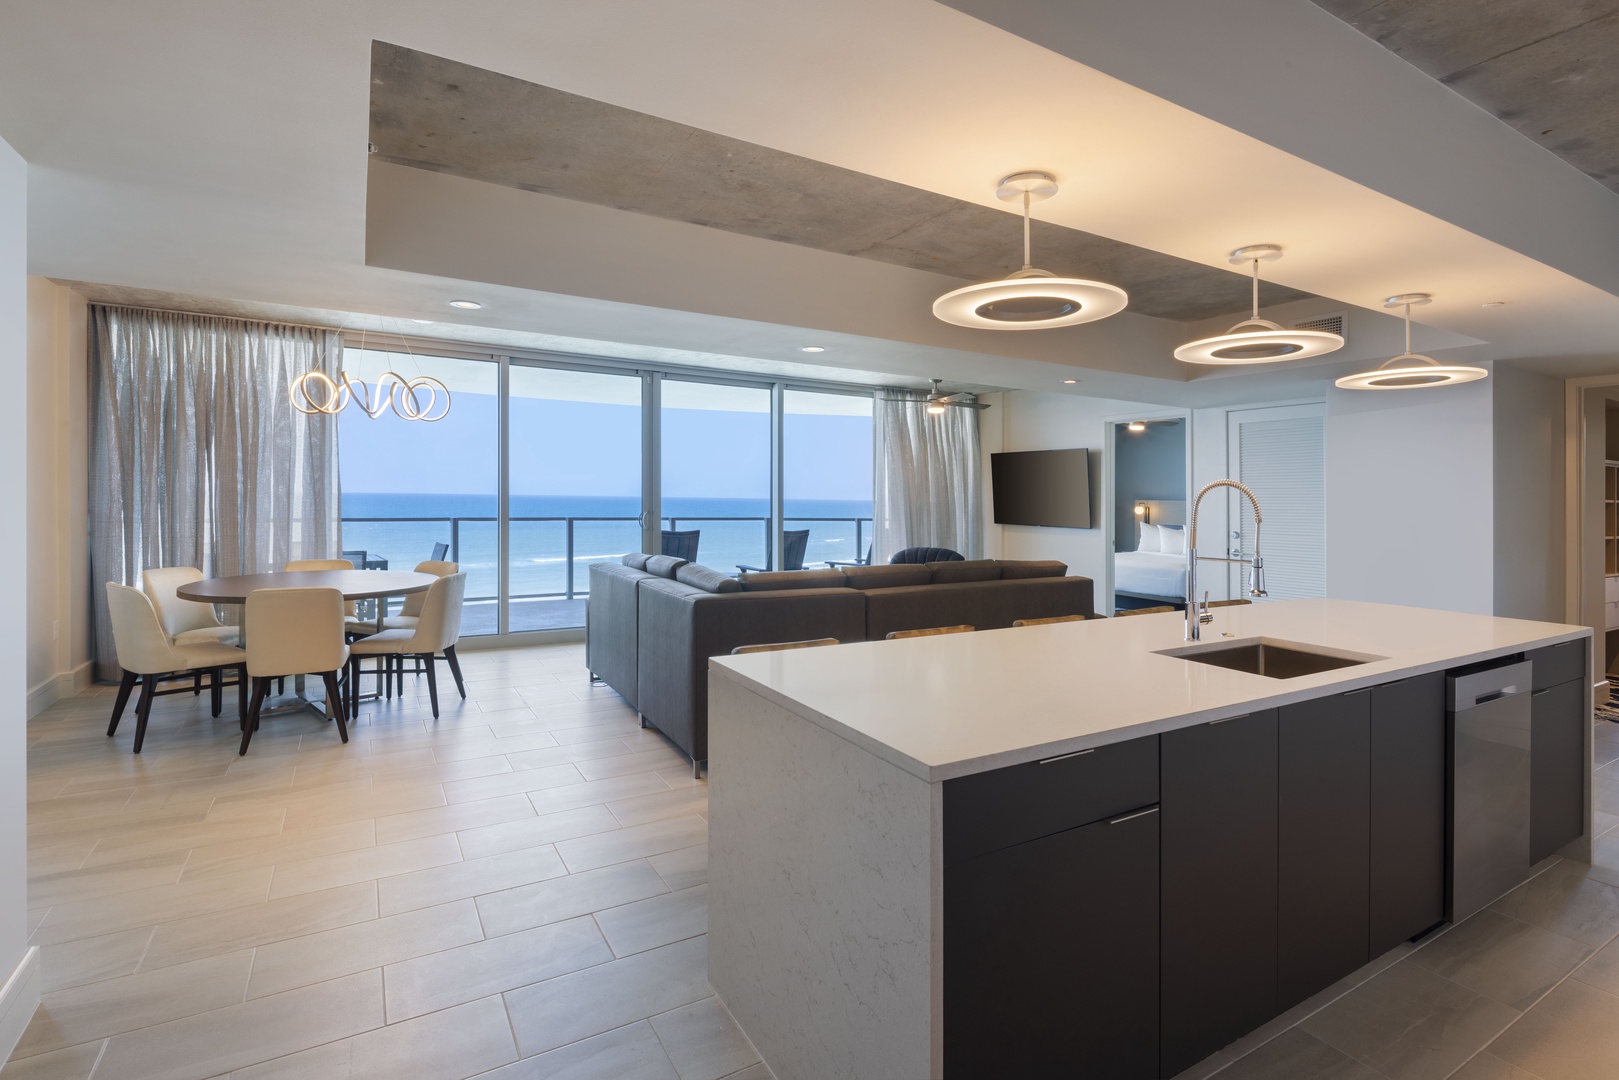 Ocean Breezes and Comfort: Open Concept Living Room Designed for Serenity